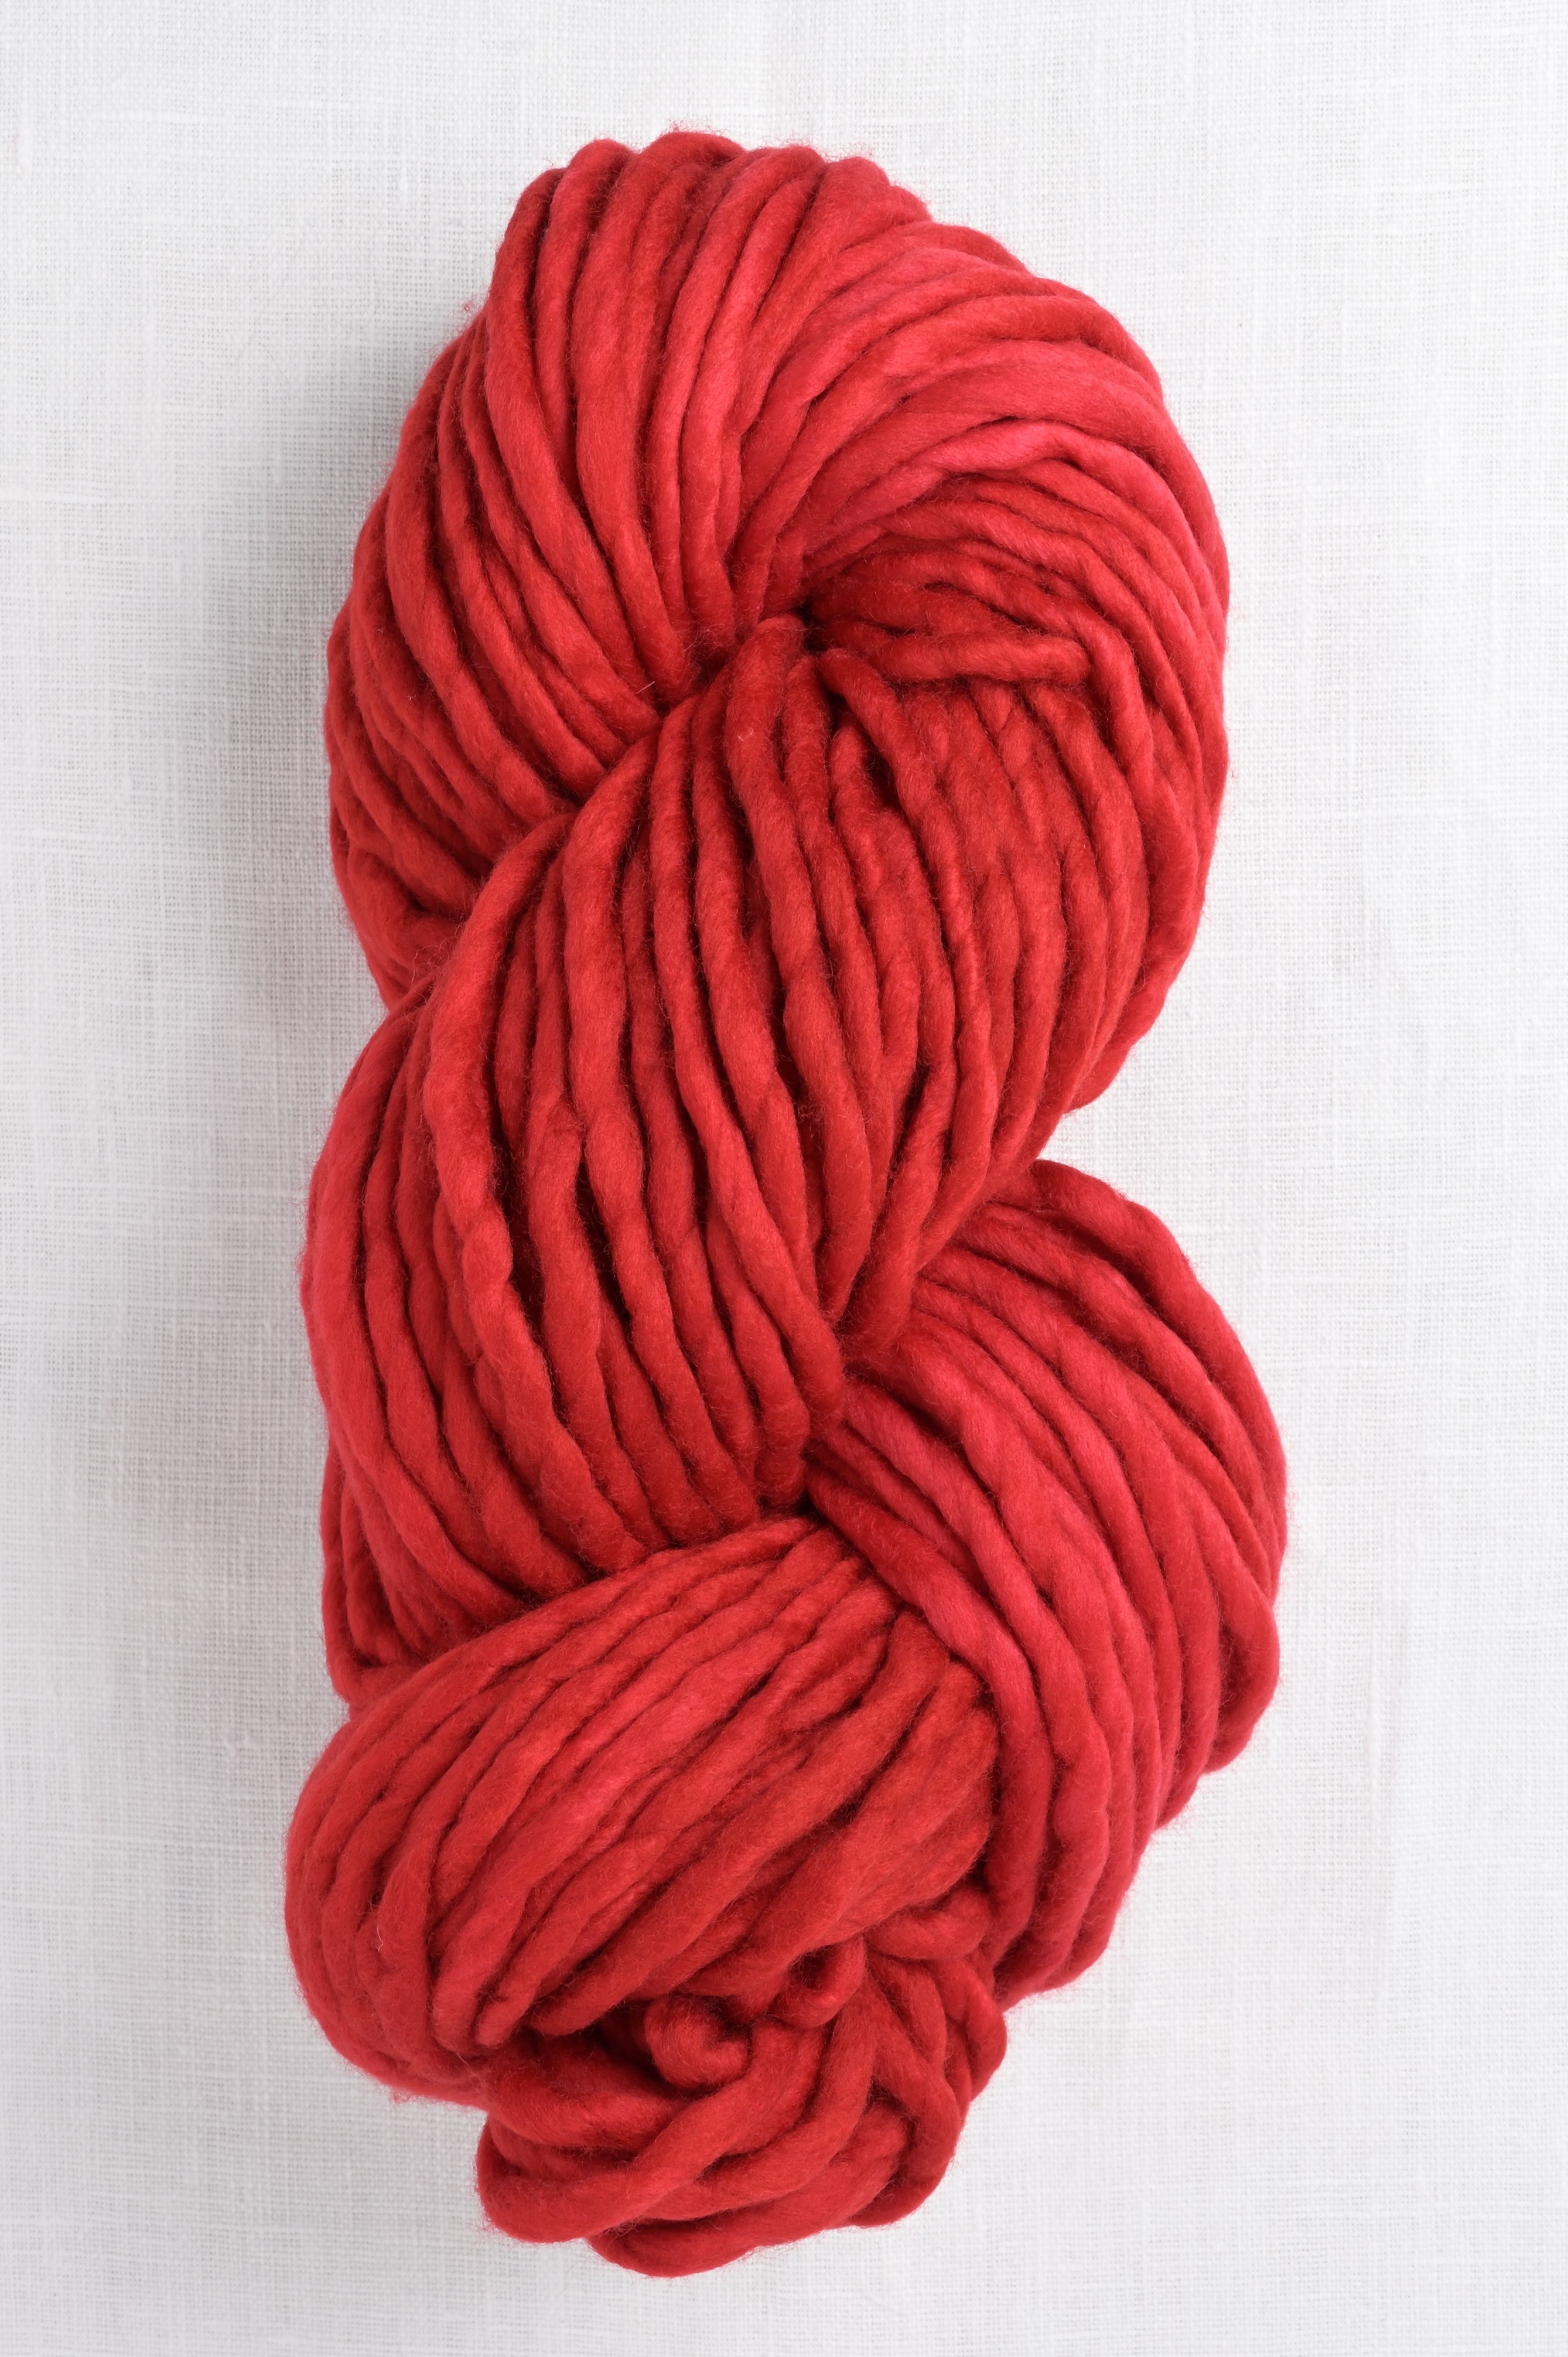 Malabrigo Worsted Merino Yarn - 611 Ravelry Red at Jimmy Beans Wool